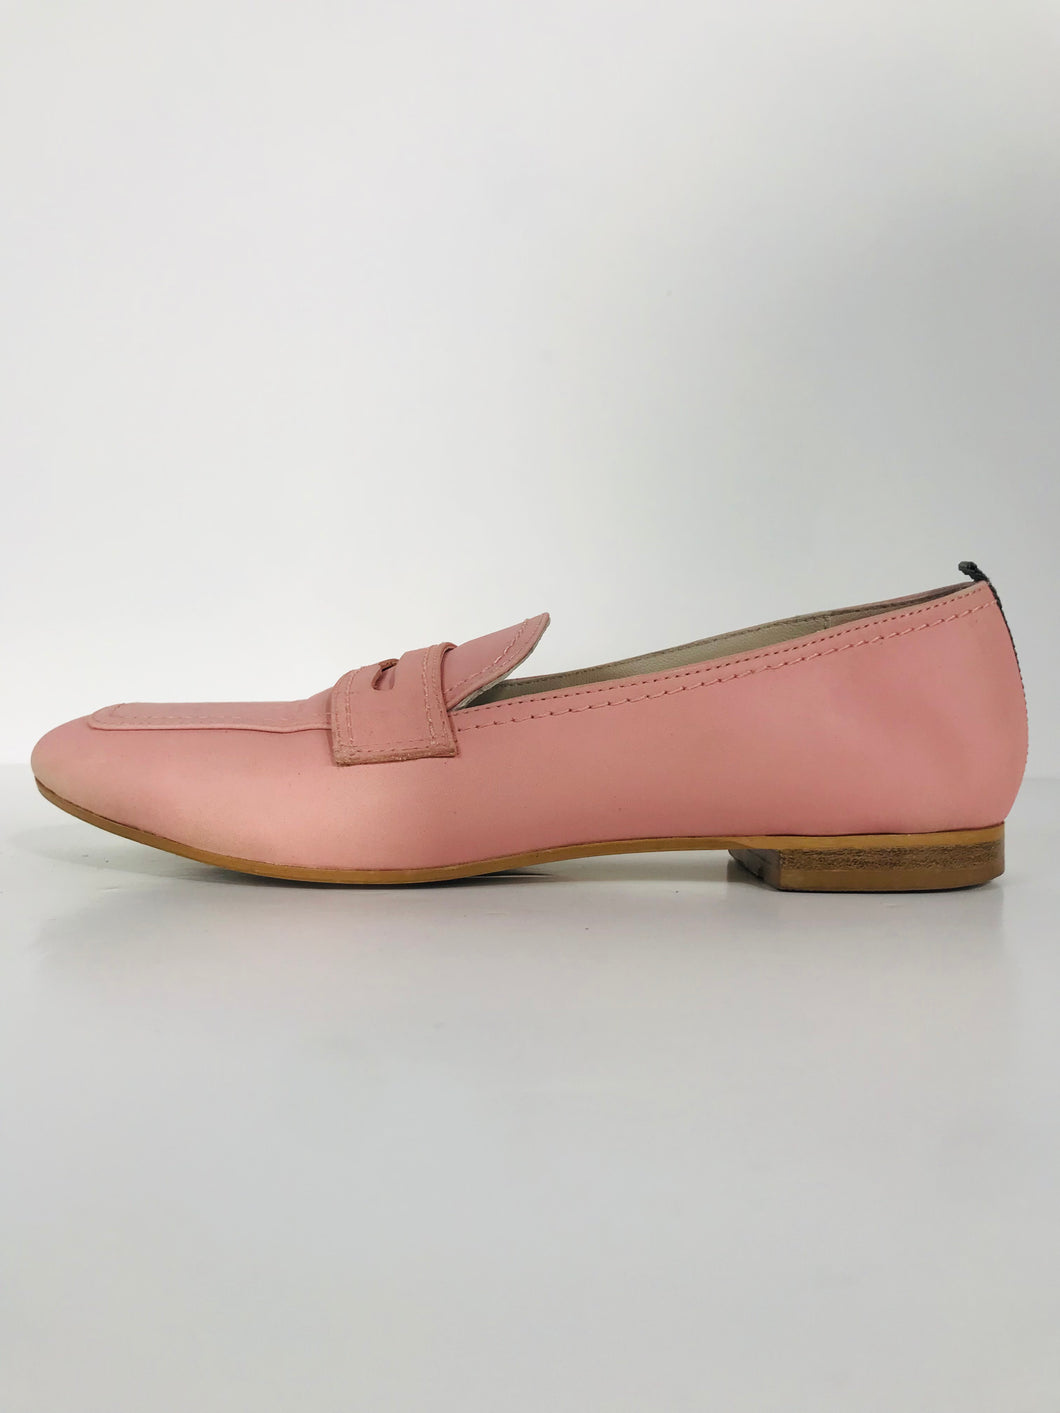 Boden Women's Slip On Loafer Shoes | UK5 | Pink